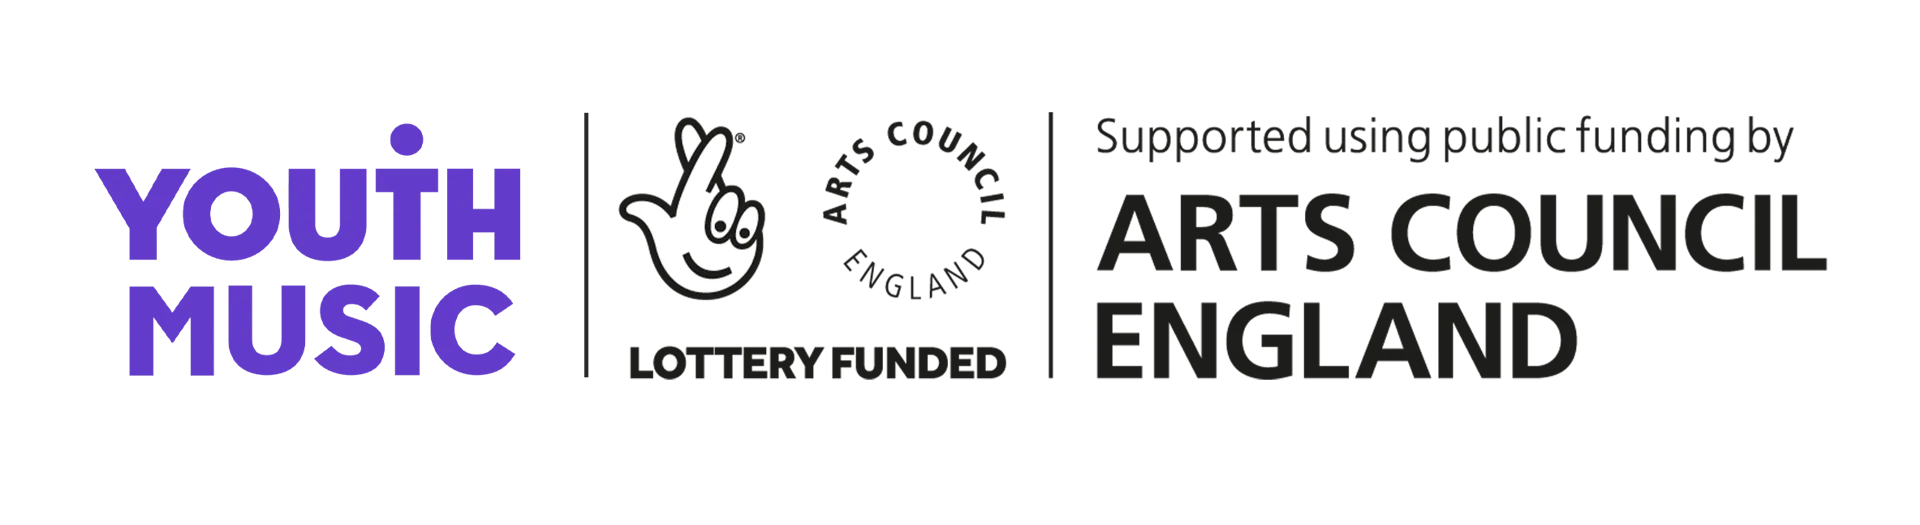 Lottery Grant Award Logo Dark